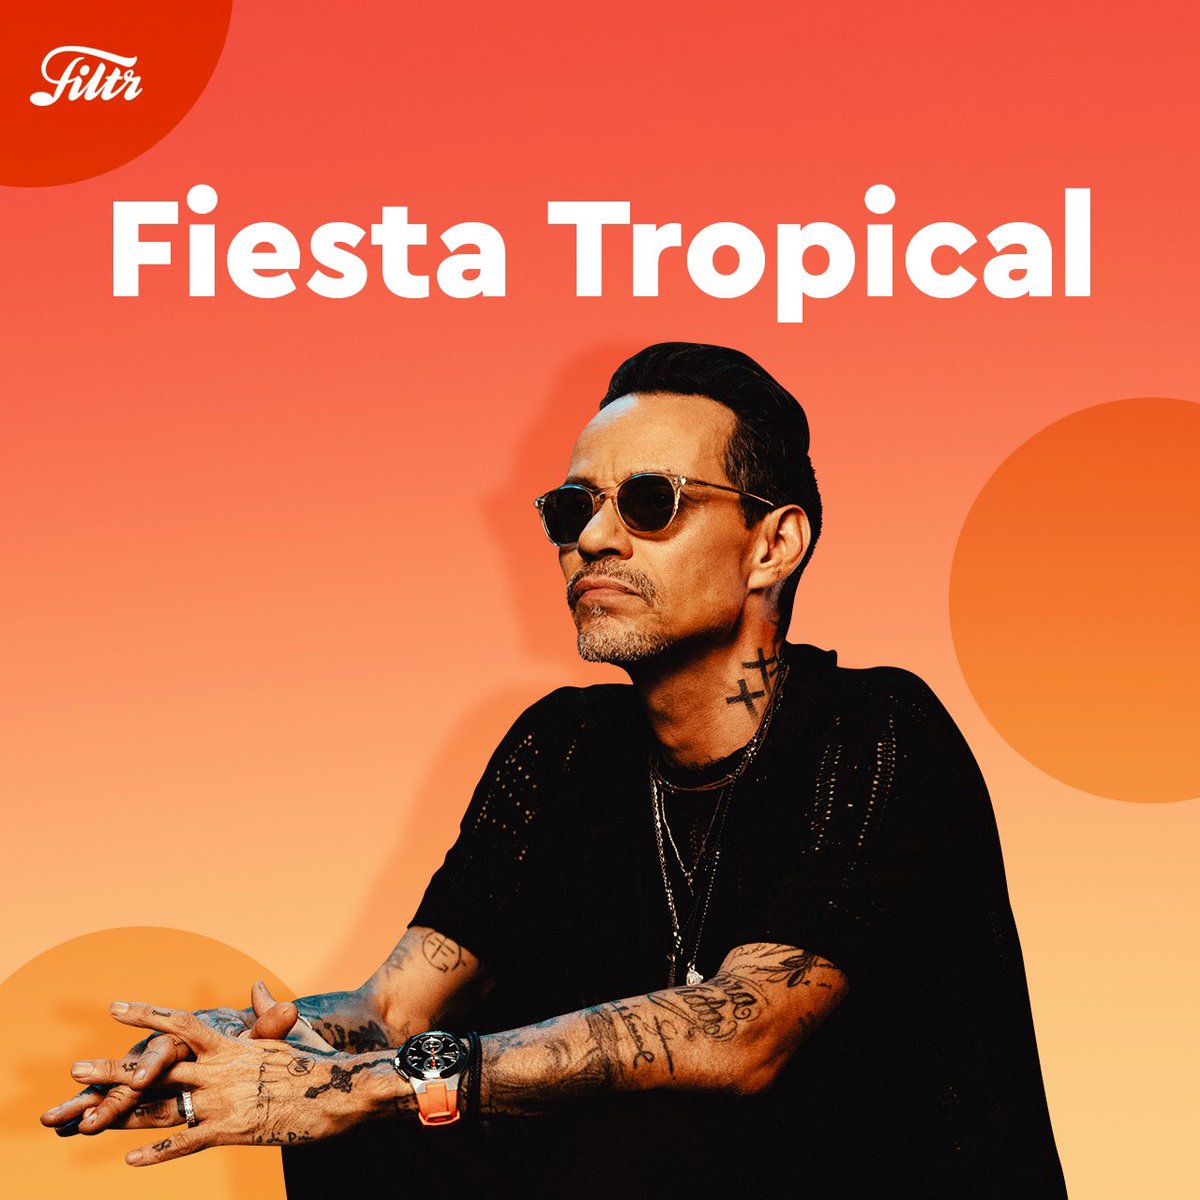 #AleAle está en Fiesta Tropical de #FiltrLatin open.spotify.com/playlist/4qQWB… #Muevense #MarcAnthony